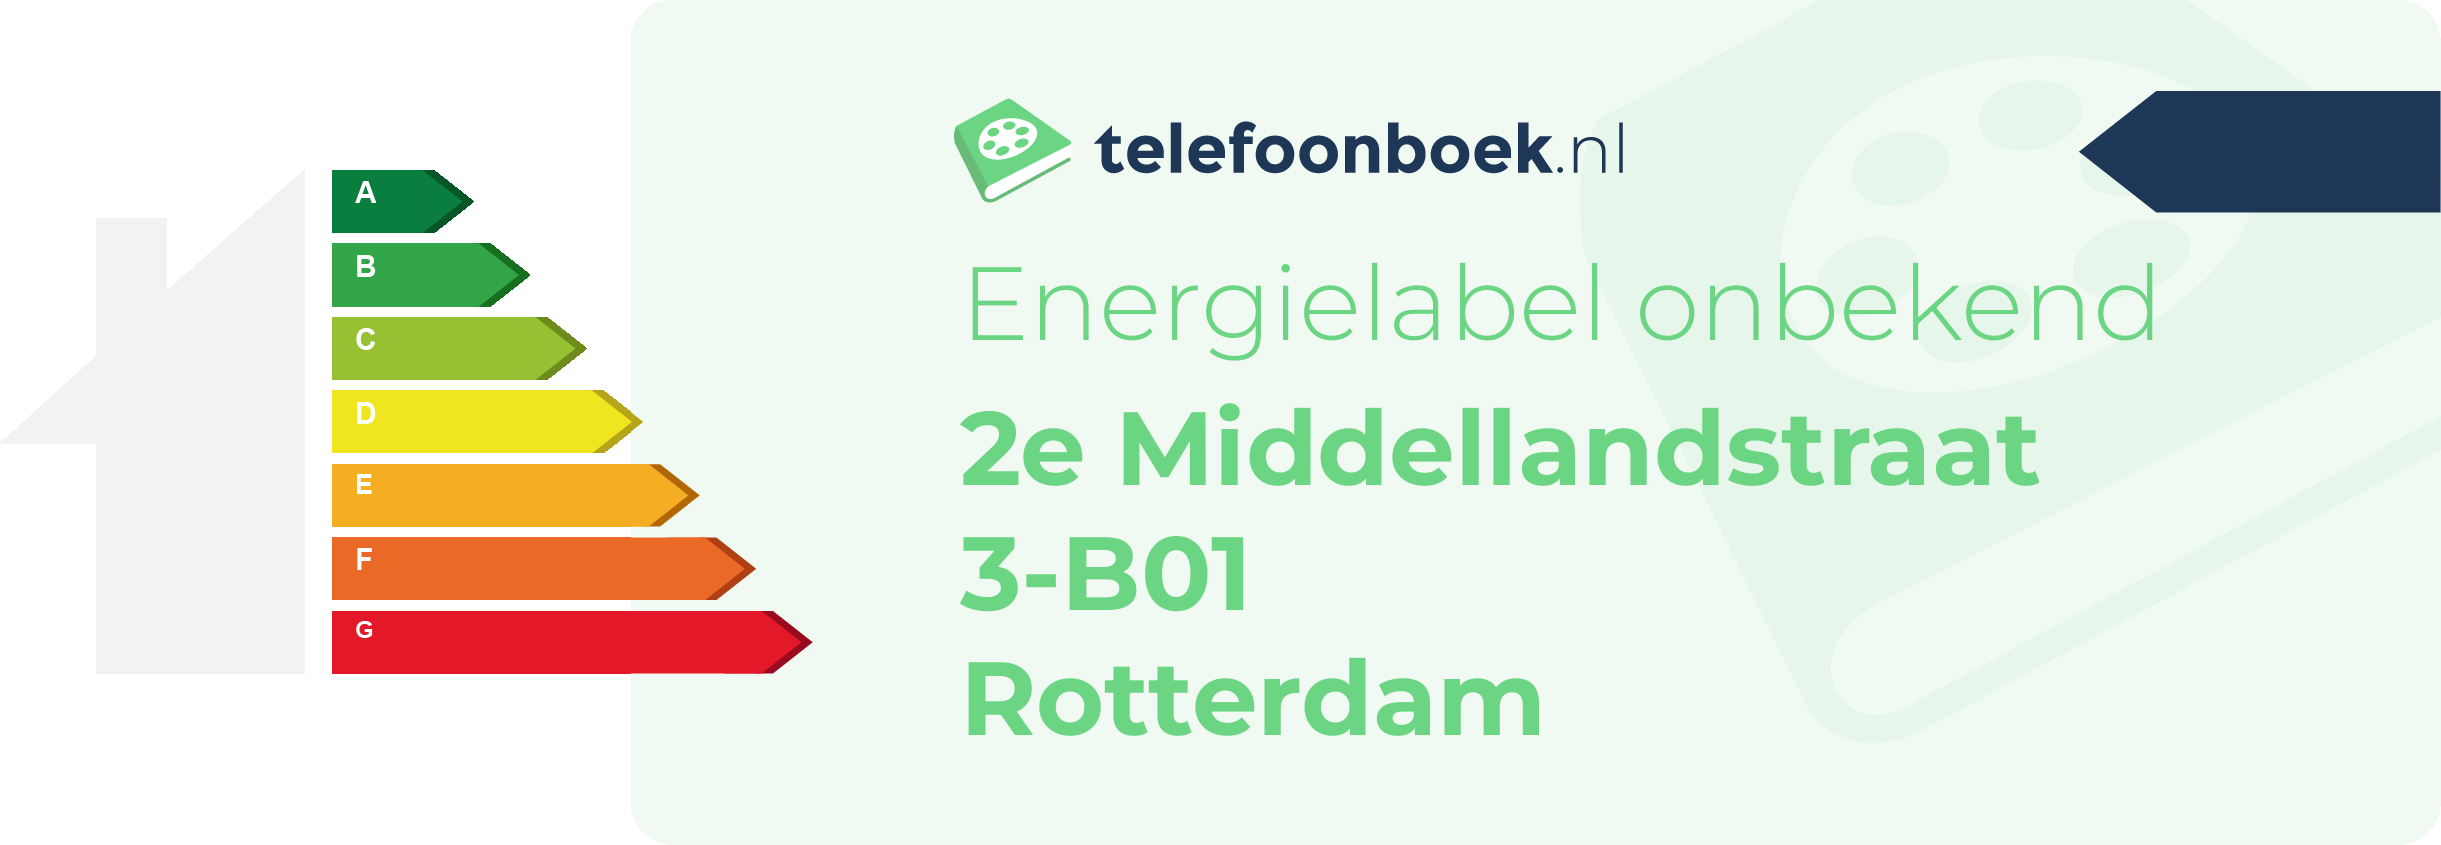 Energielabel 2e Middellandstraat 3-B01 Rotterdam